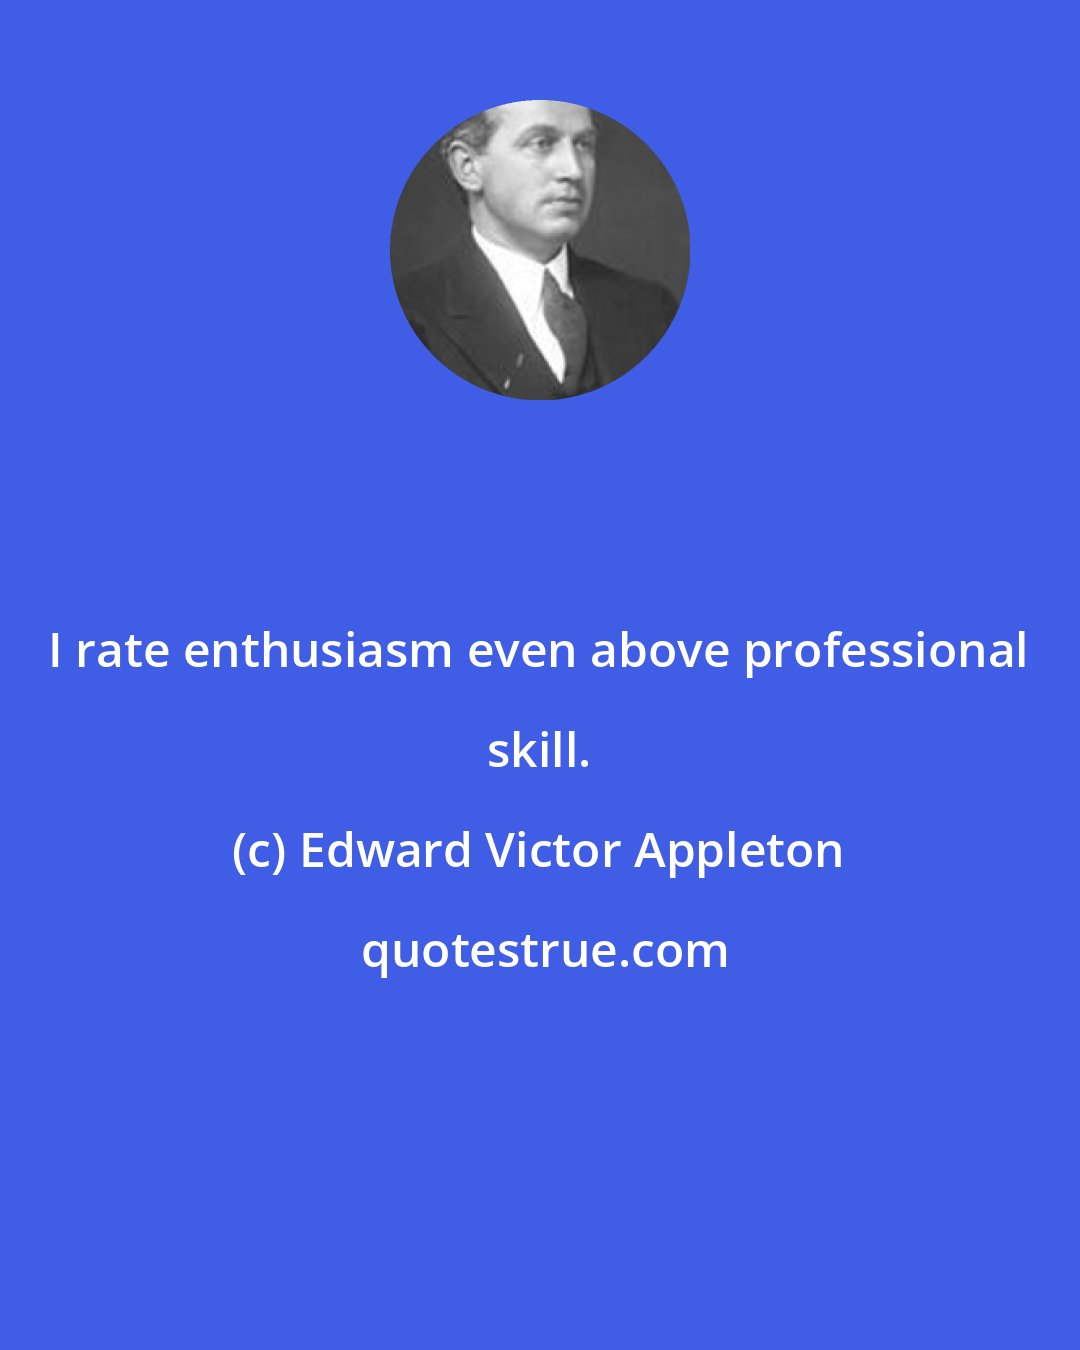 Edward Victor Appleton: I rate enthusiasm even above professional skill.